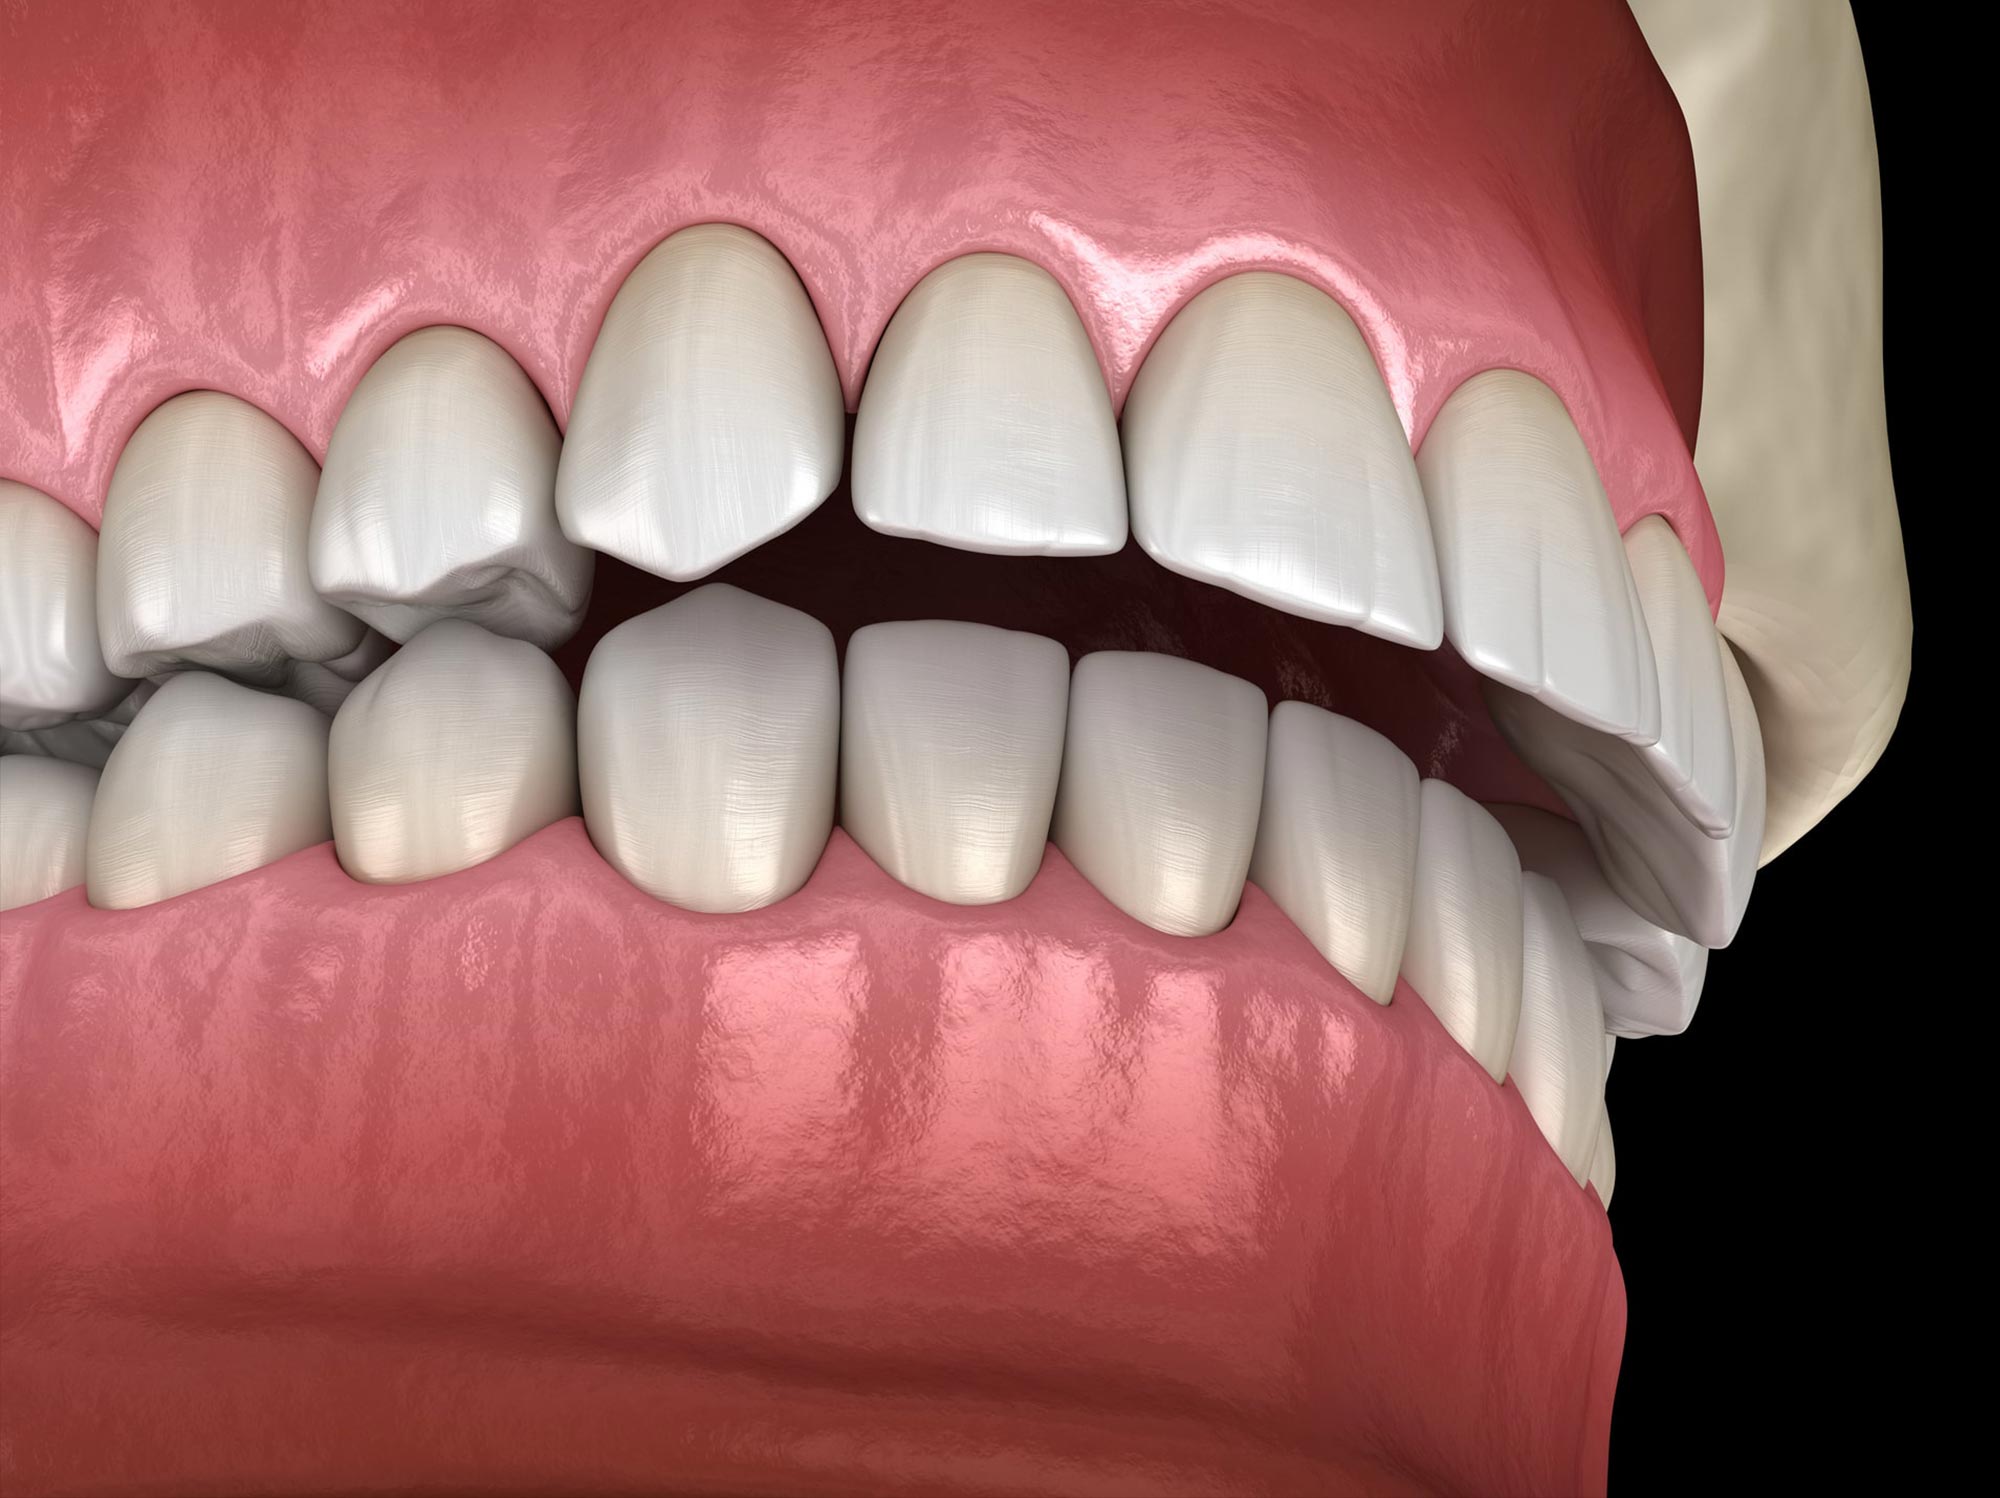 Overbite of teeth